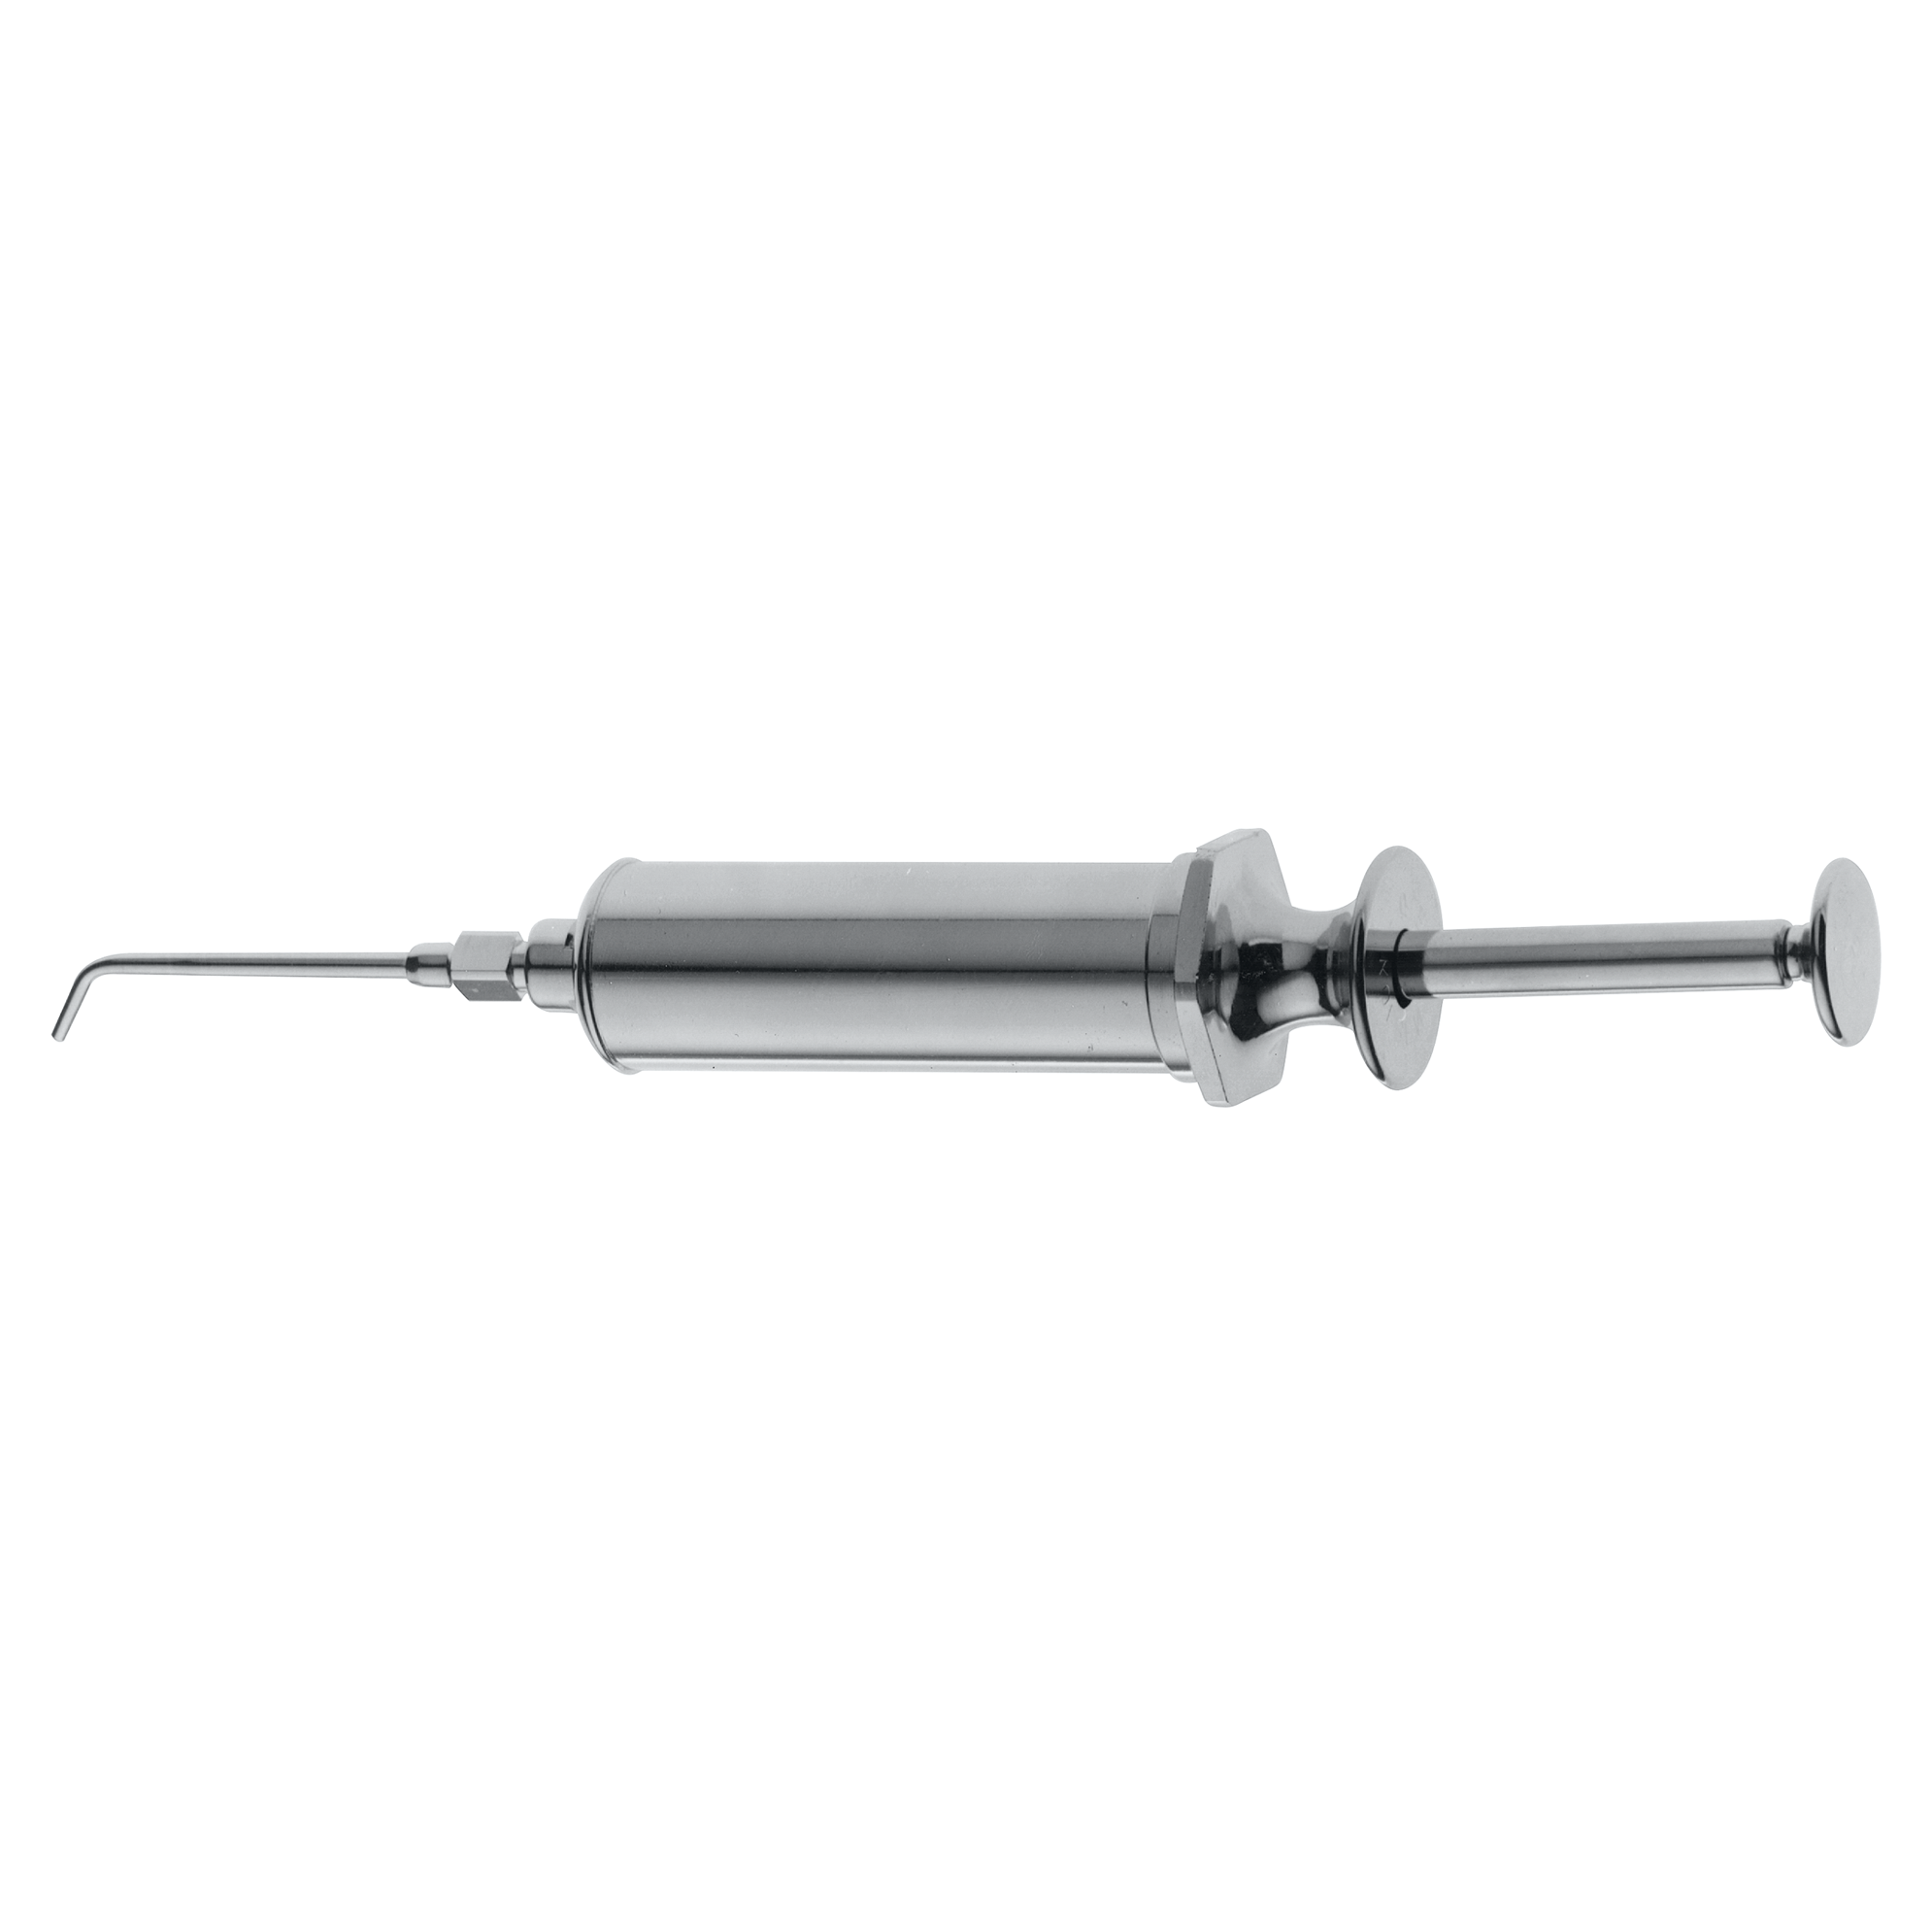 2716 (water syringe)